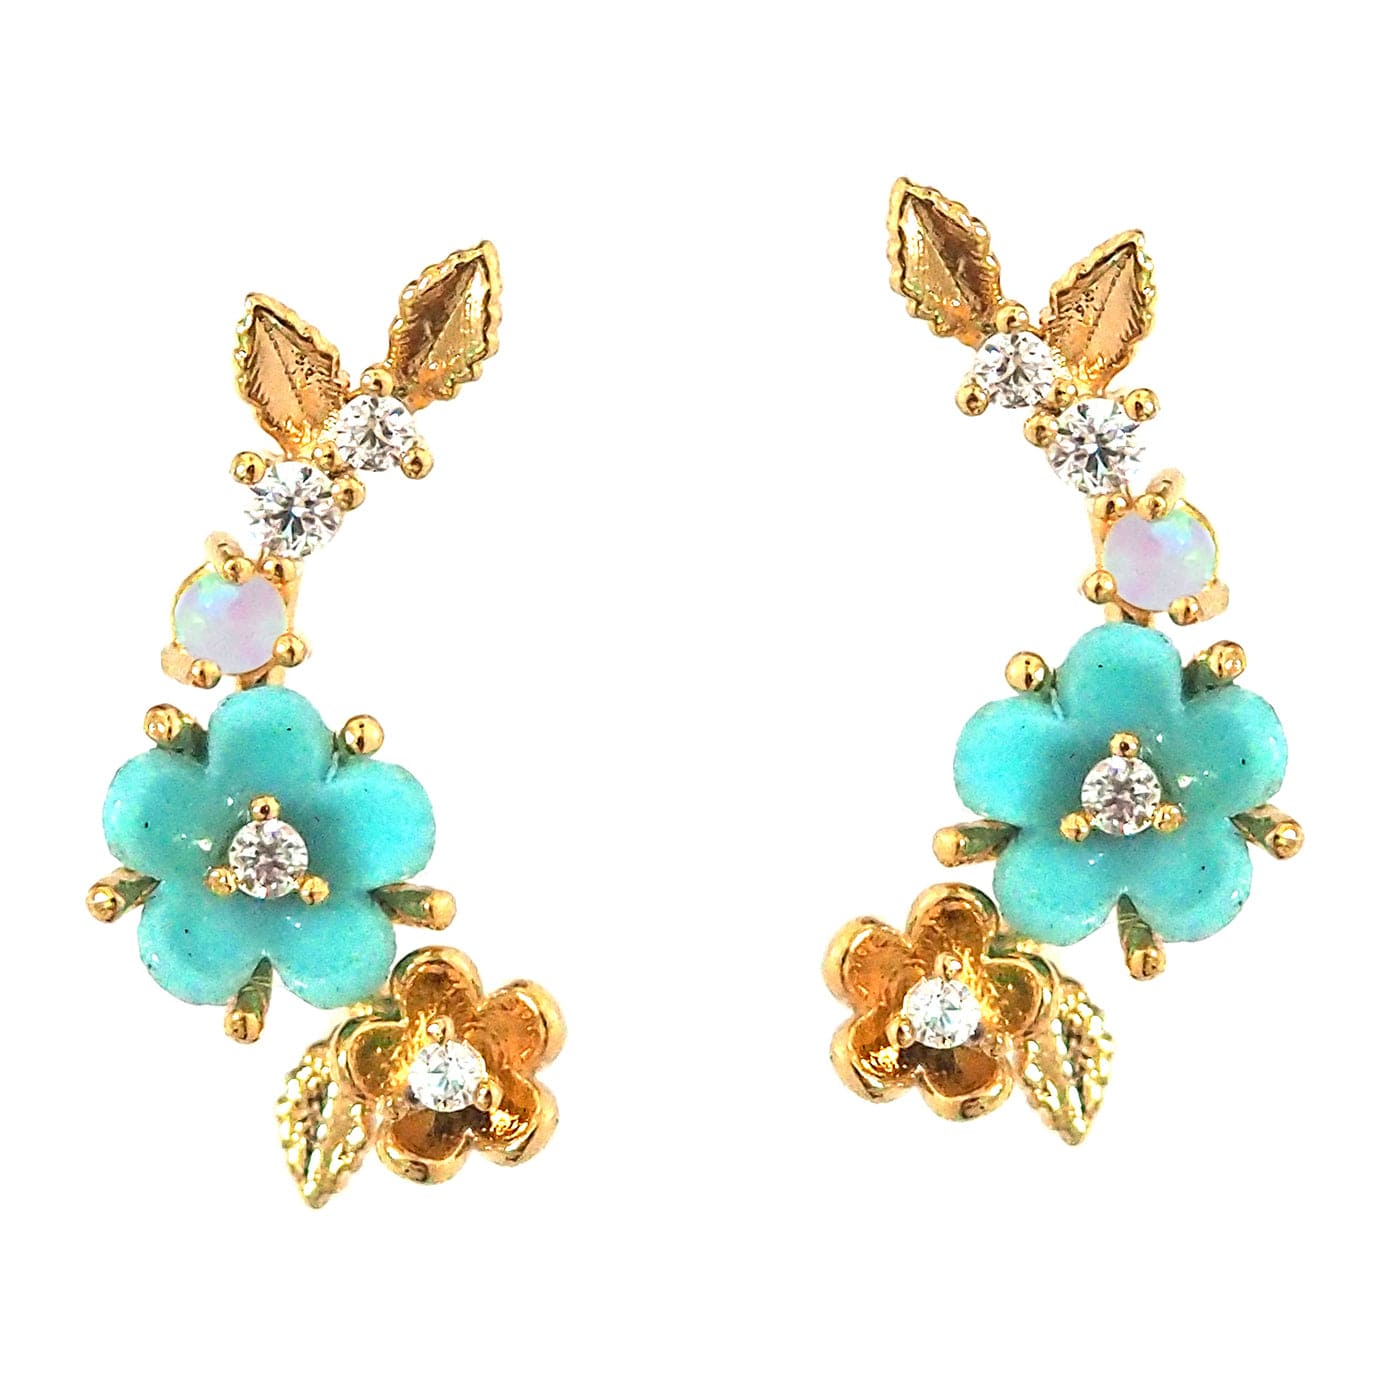 TAI JEWELRY Earrings Turquoise Blossom Trail Crawler Earrings